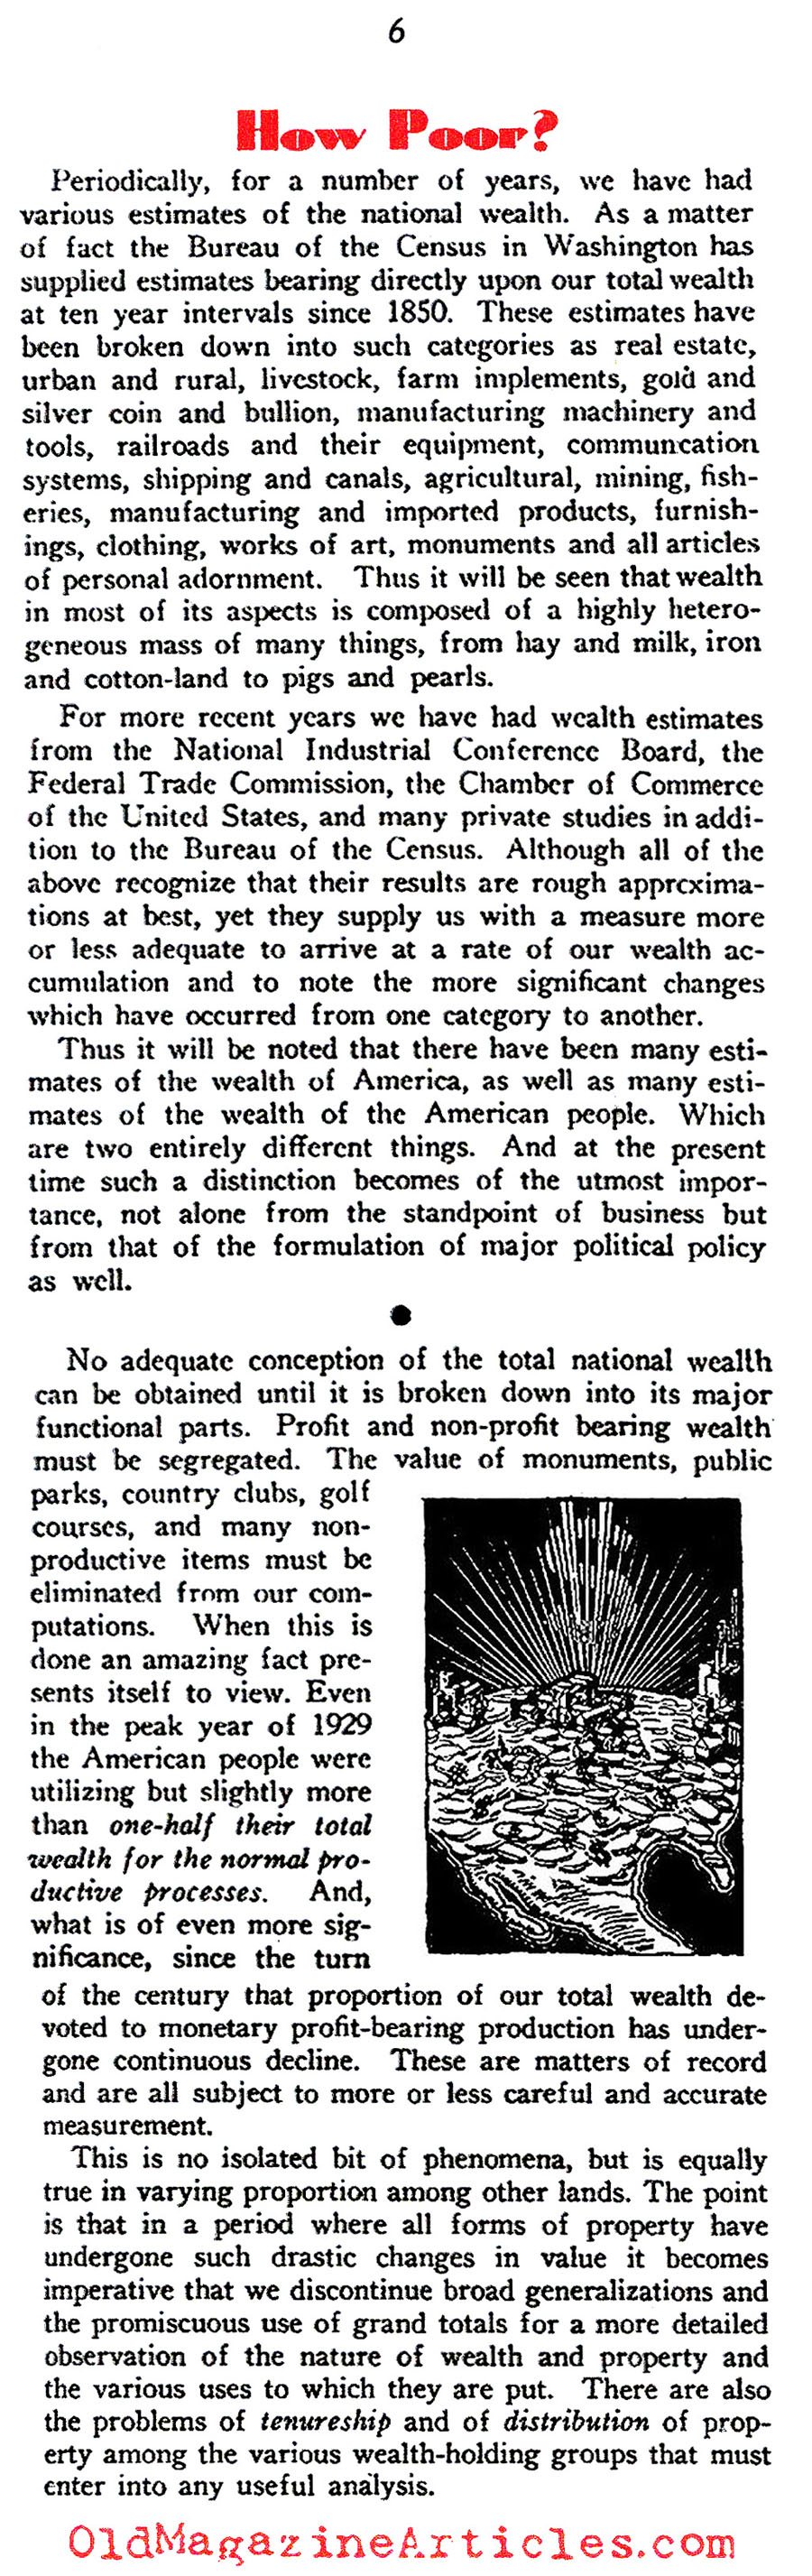 How Poor Was America? (New Outlook Magazine, 1933)